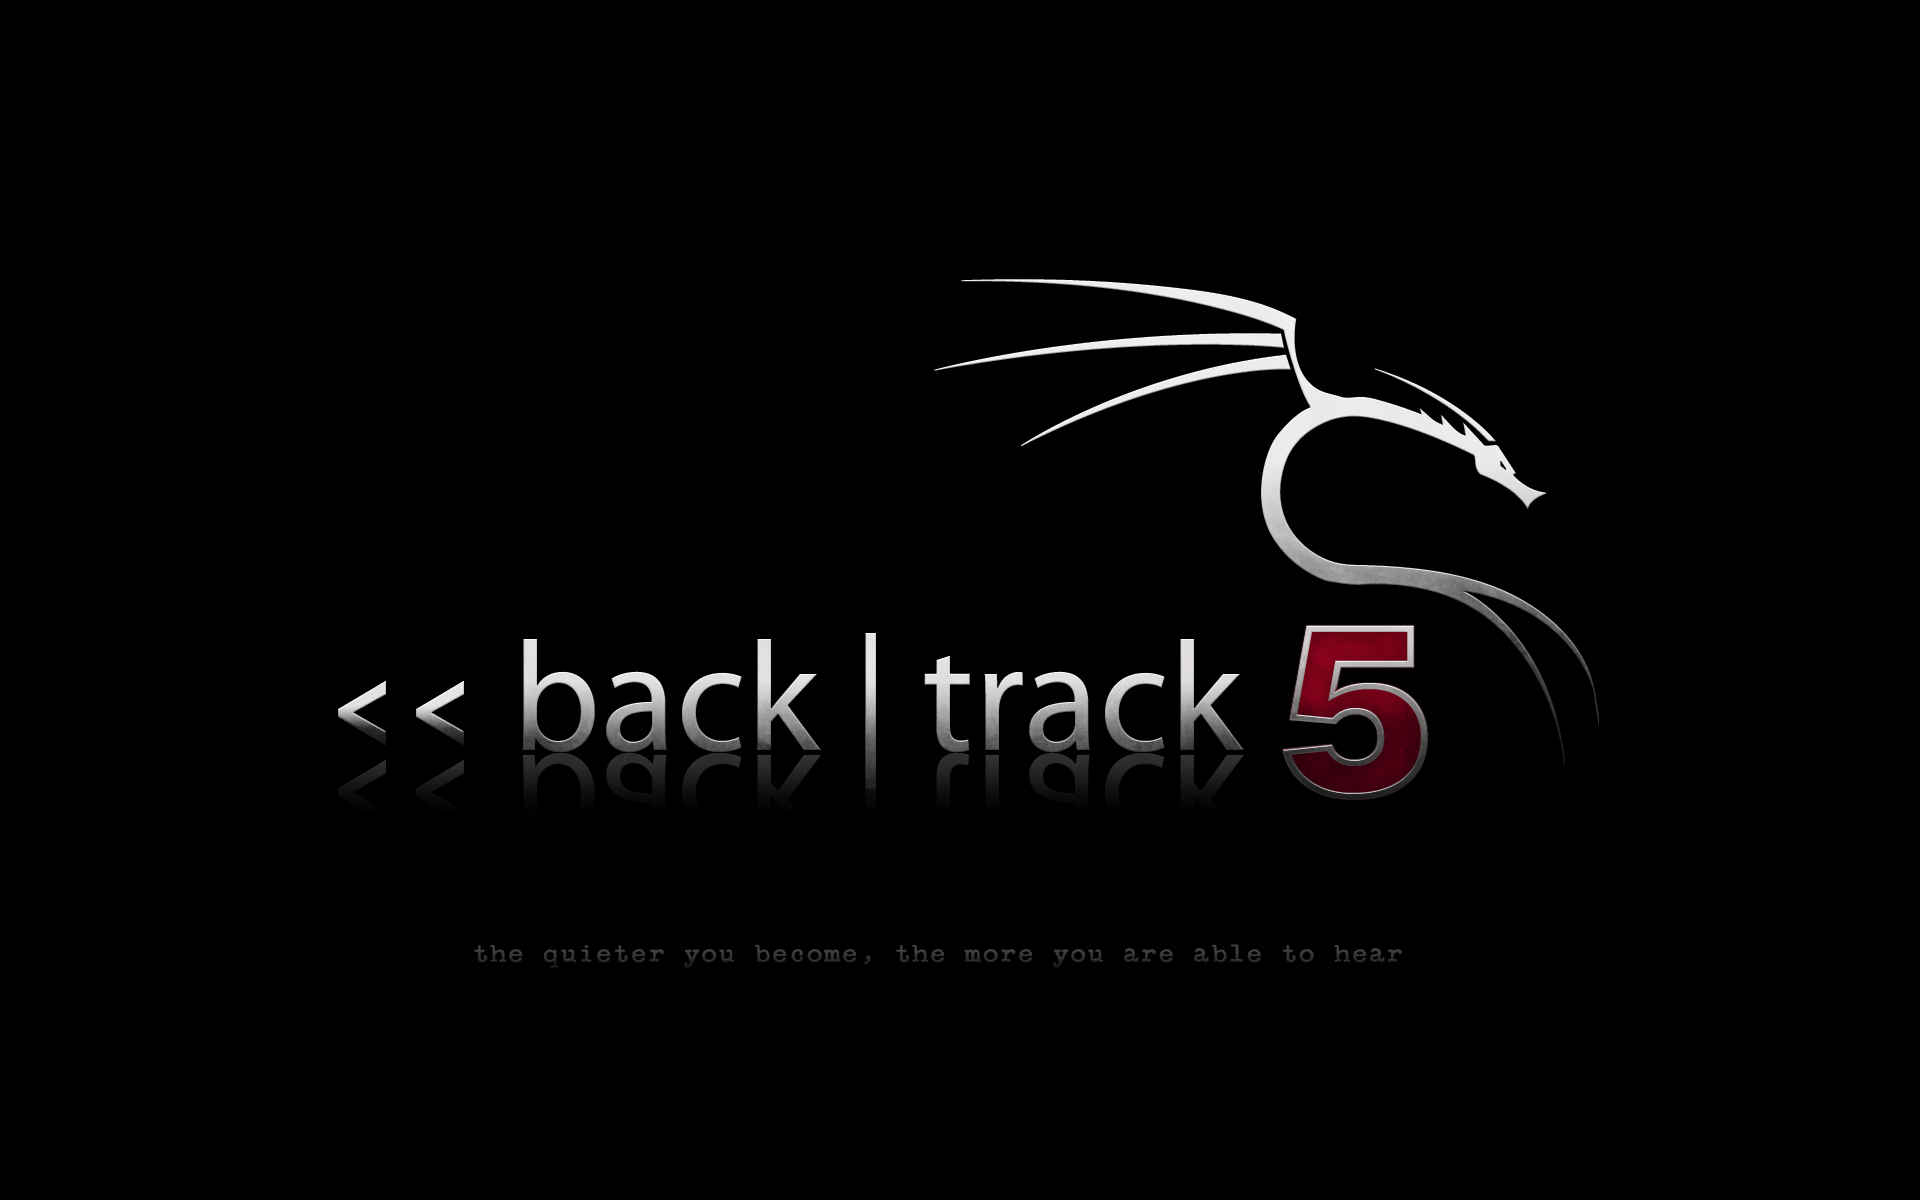 backtrack-5-black-1.png